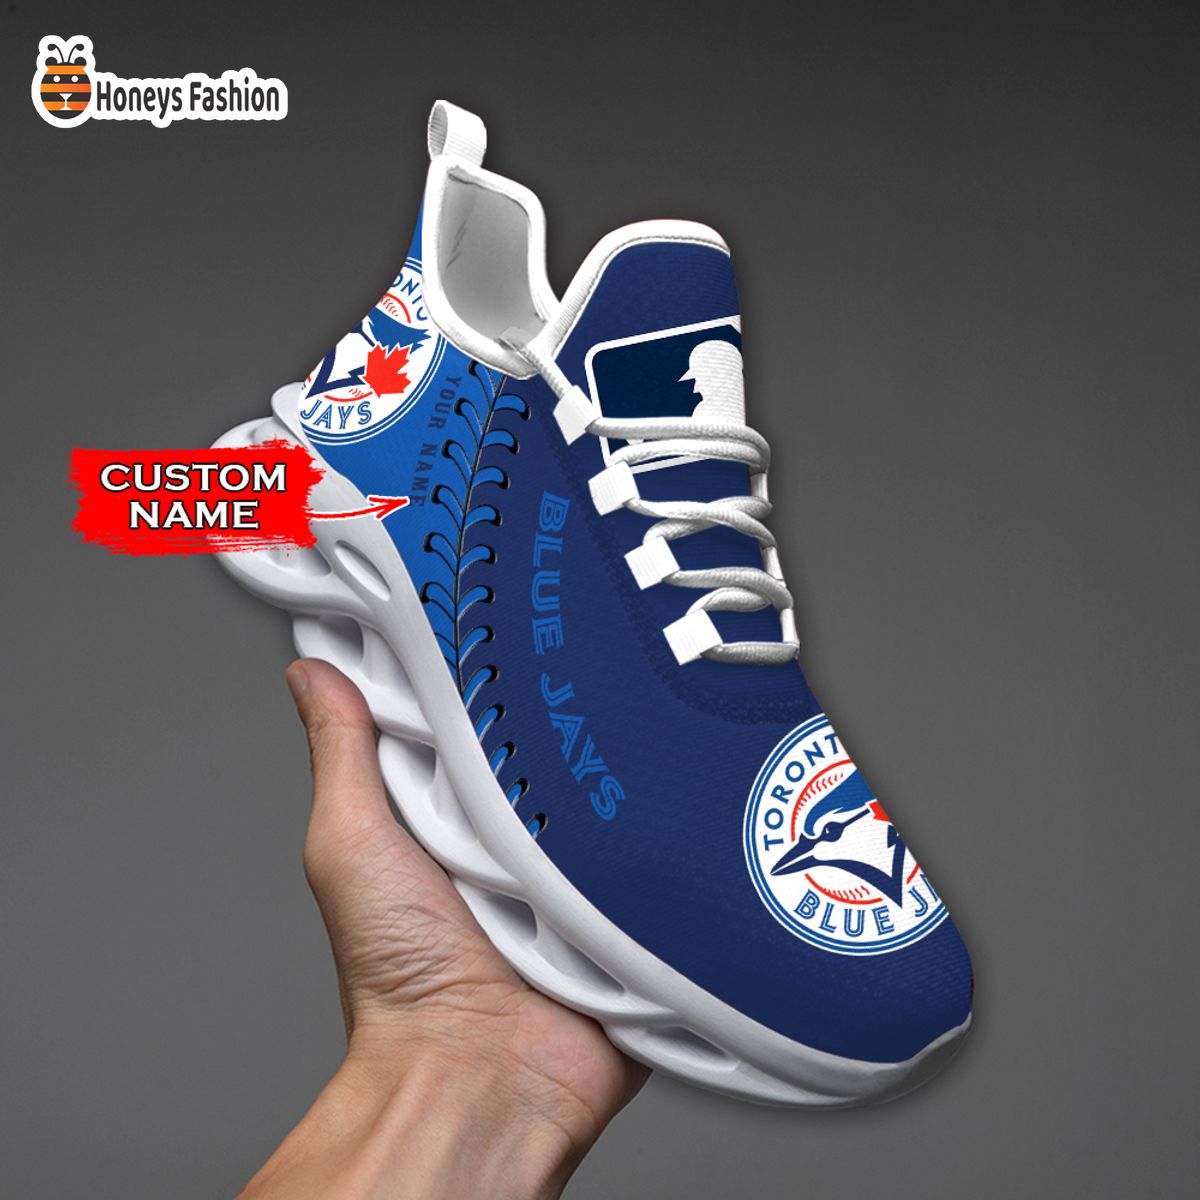 oronto Blue Jays MLB Custom Name Max Soul Sneaker